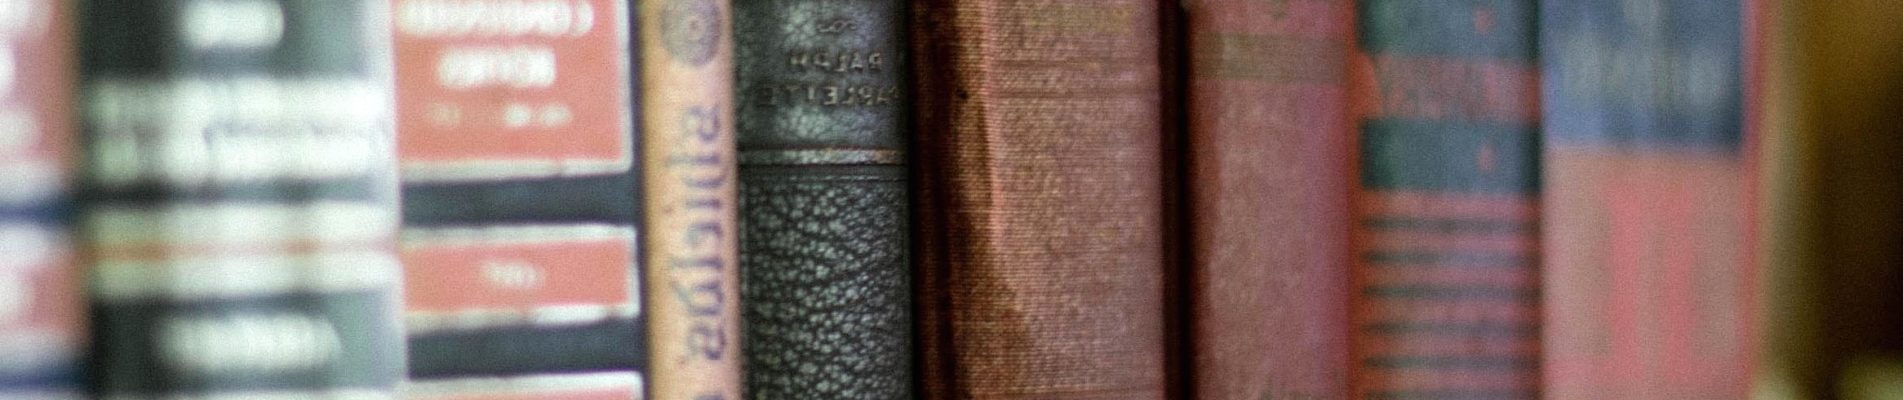 Periodic editions